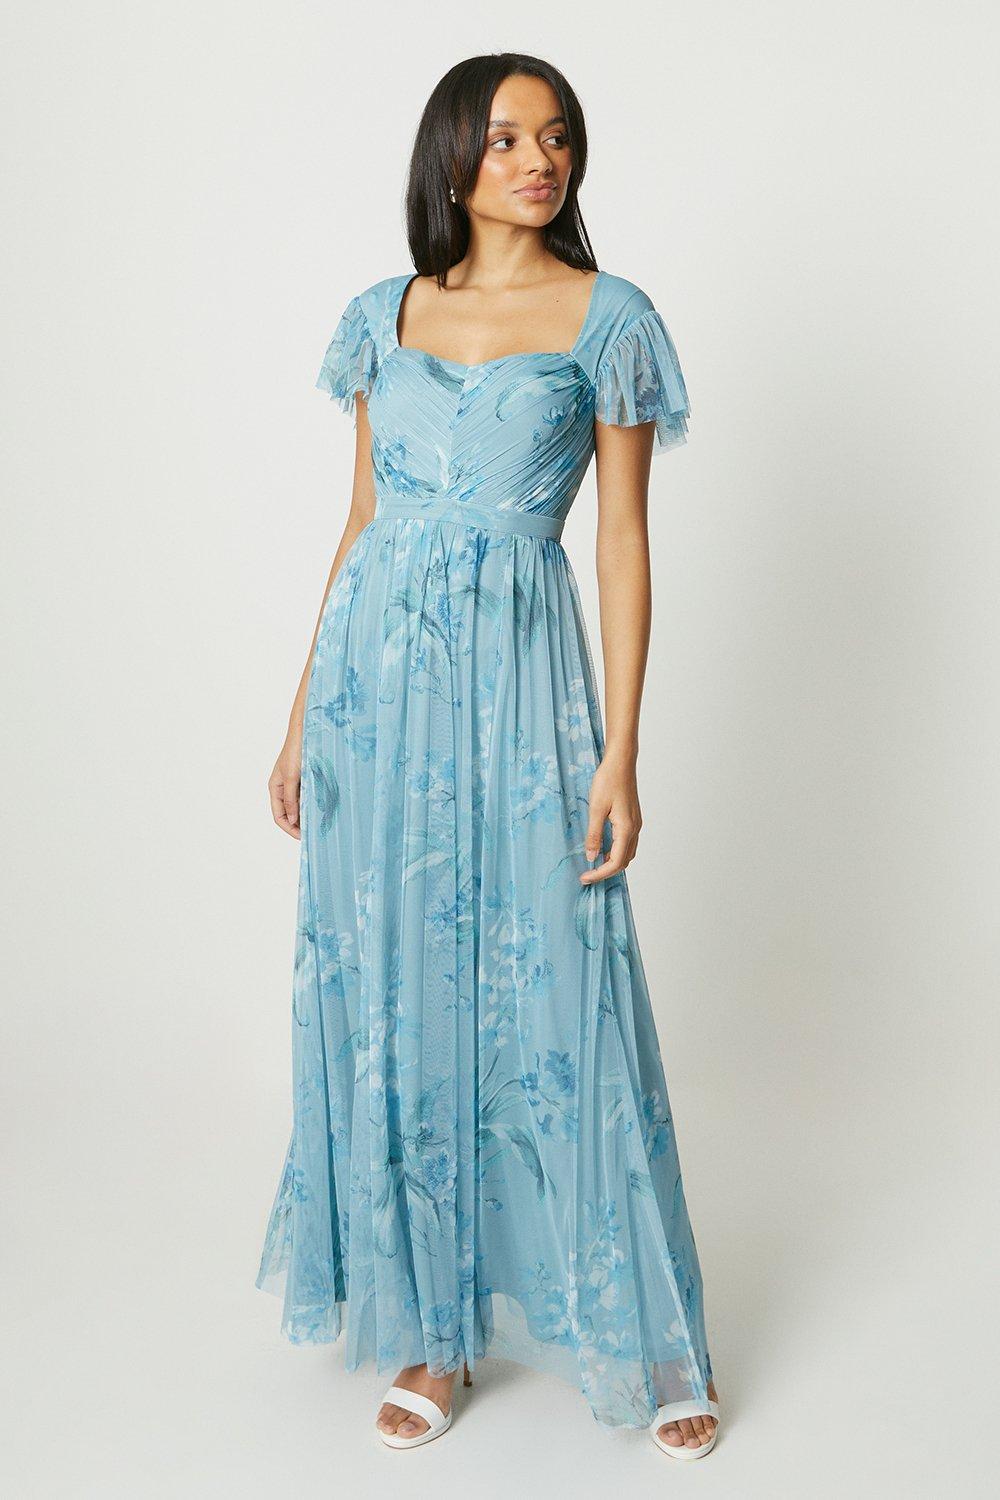 Half Sleeve Floral Sky Blue Satin Engagement Dress - Xdressy